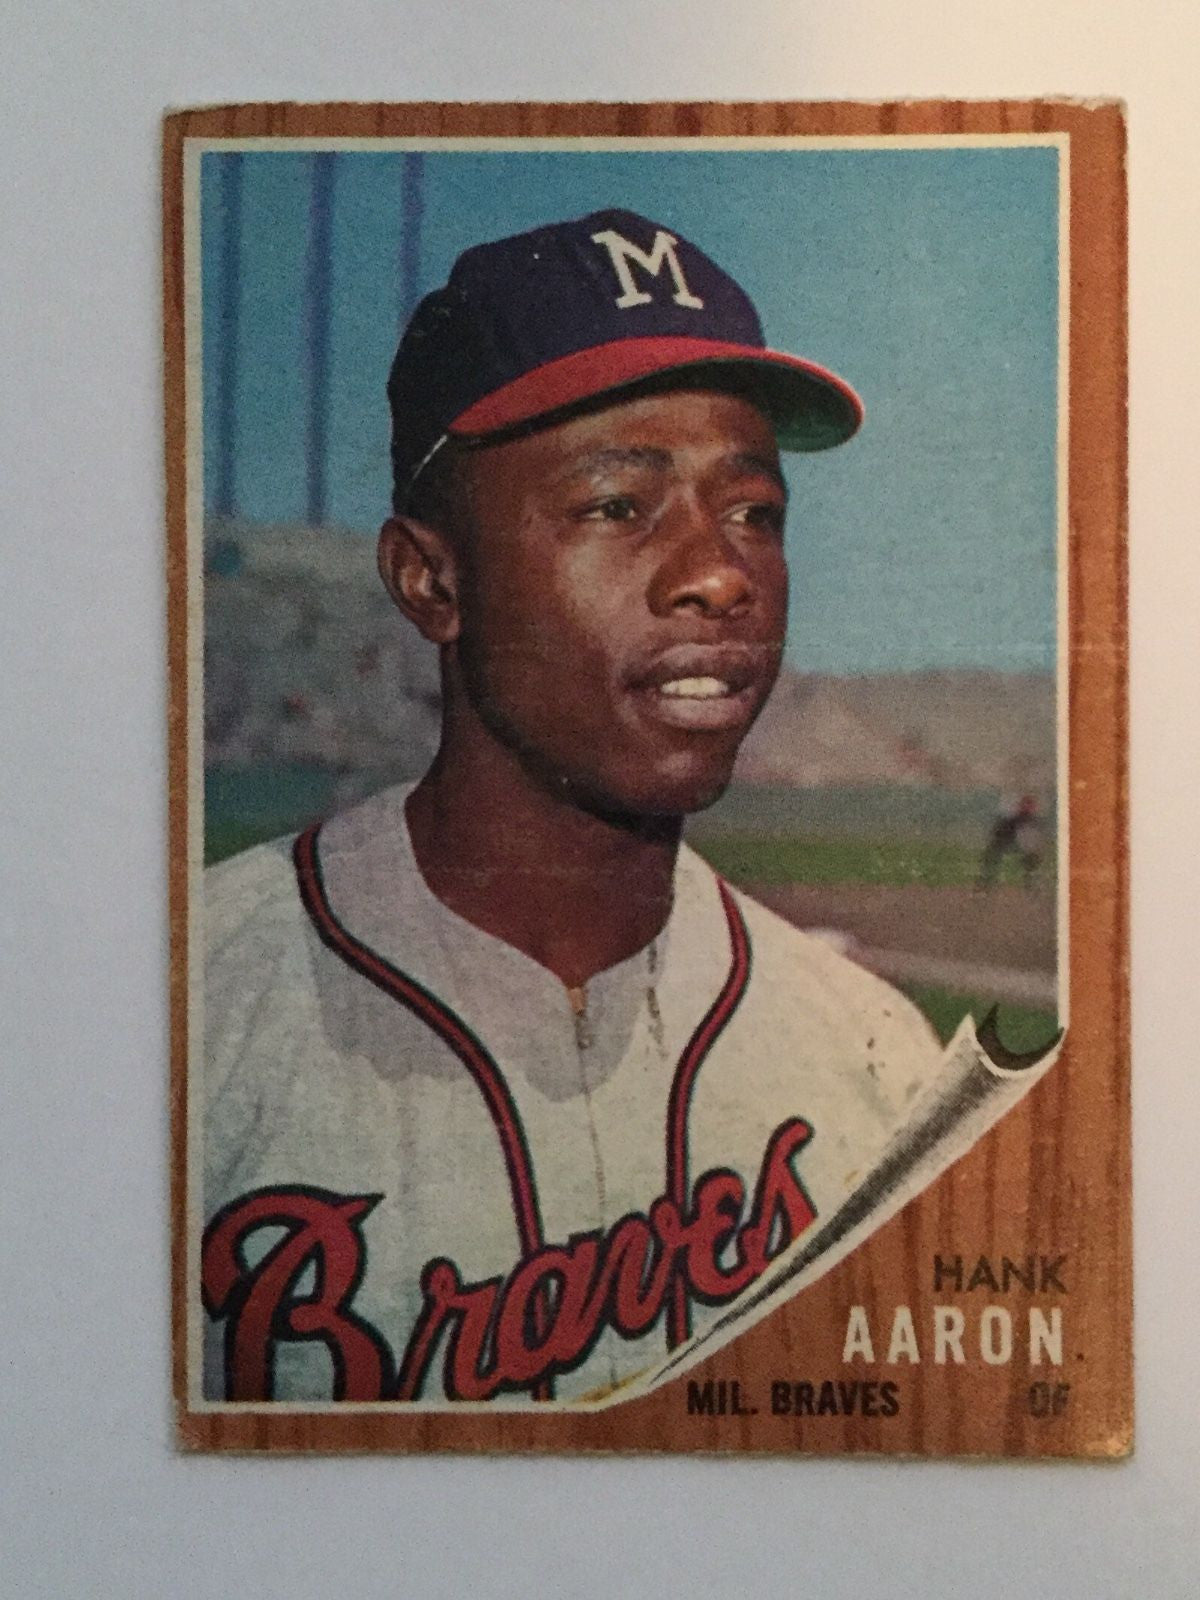 Hank Aaron rare baseball card 1960